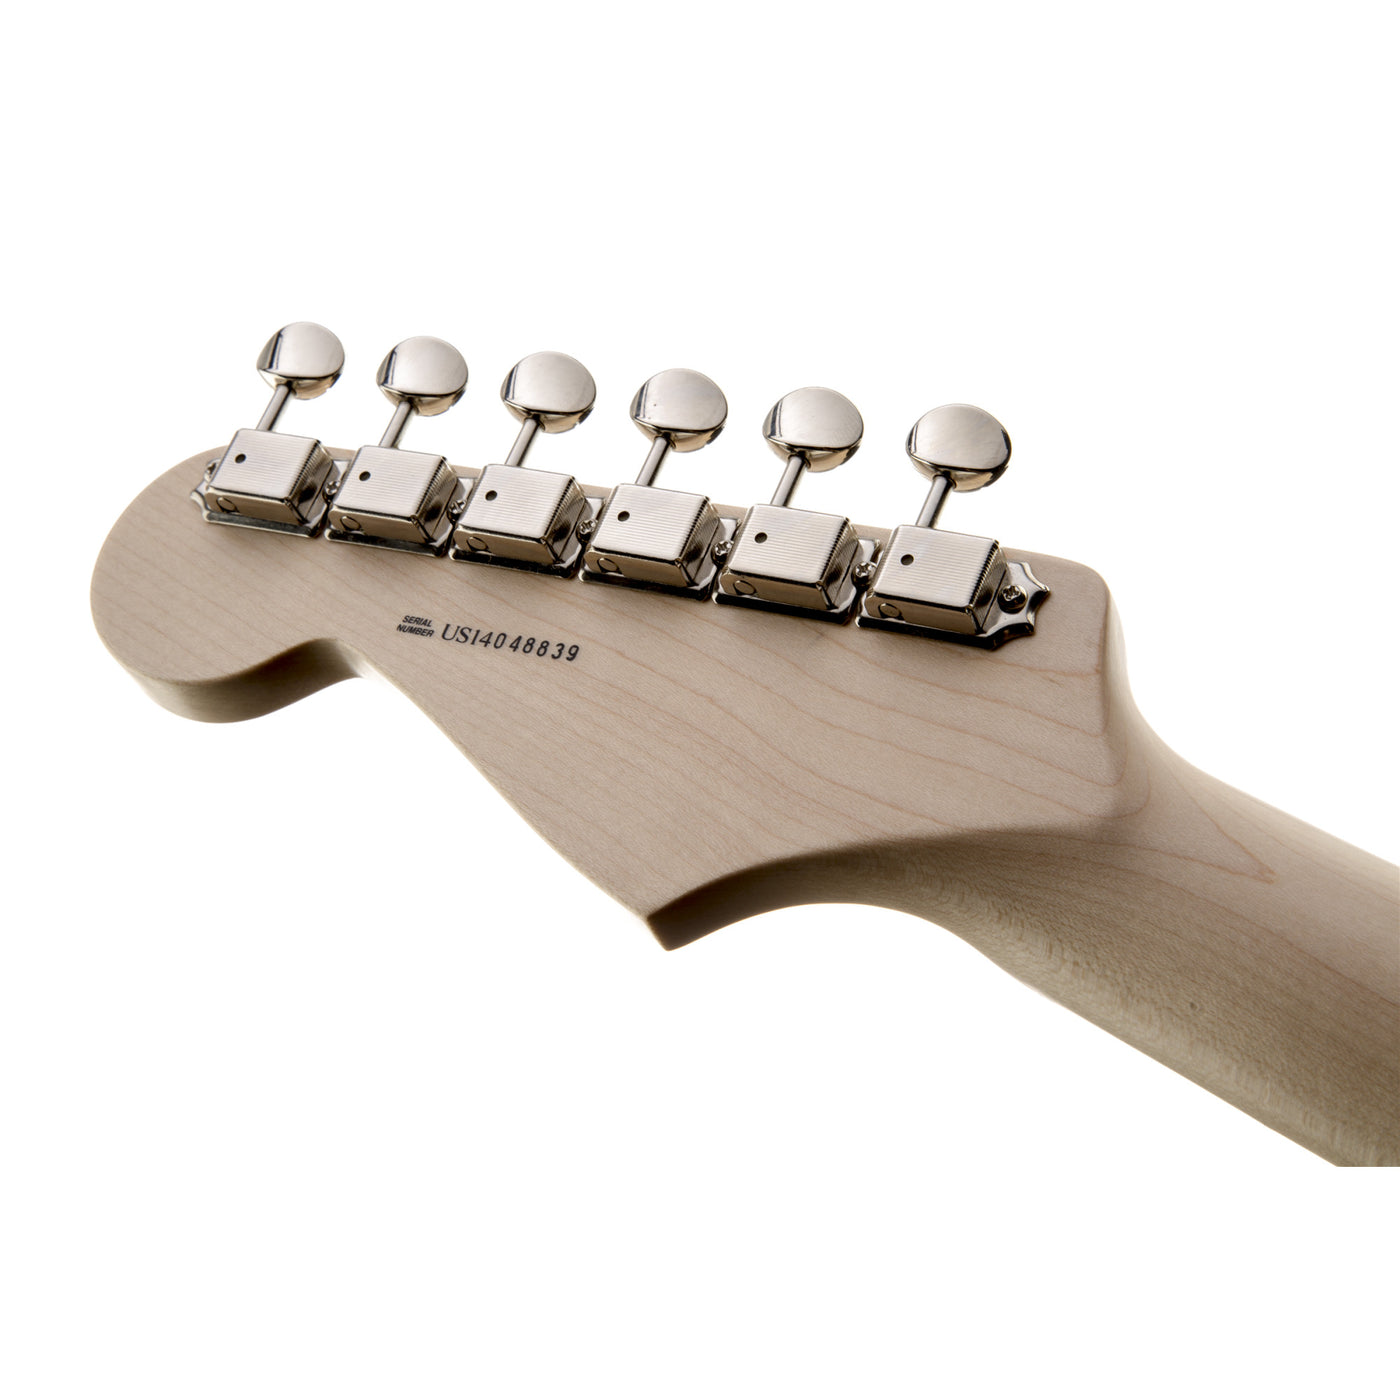 Fender Eric Clapton Stratocaster Electric Guitar- Black